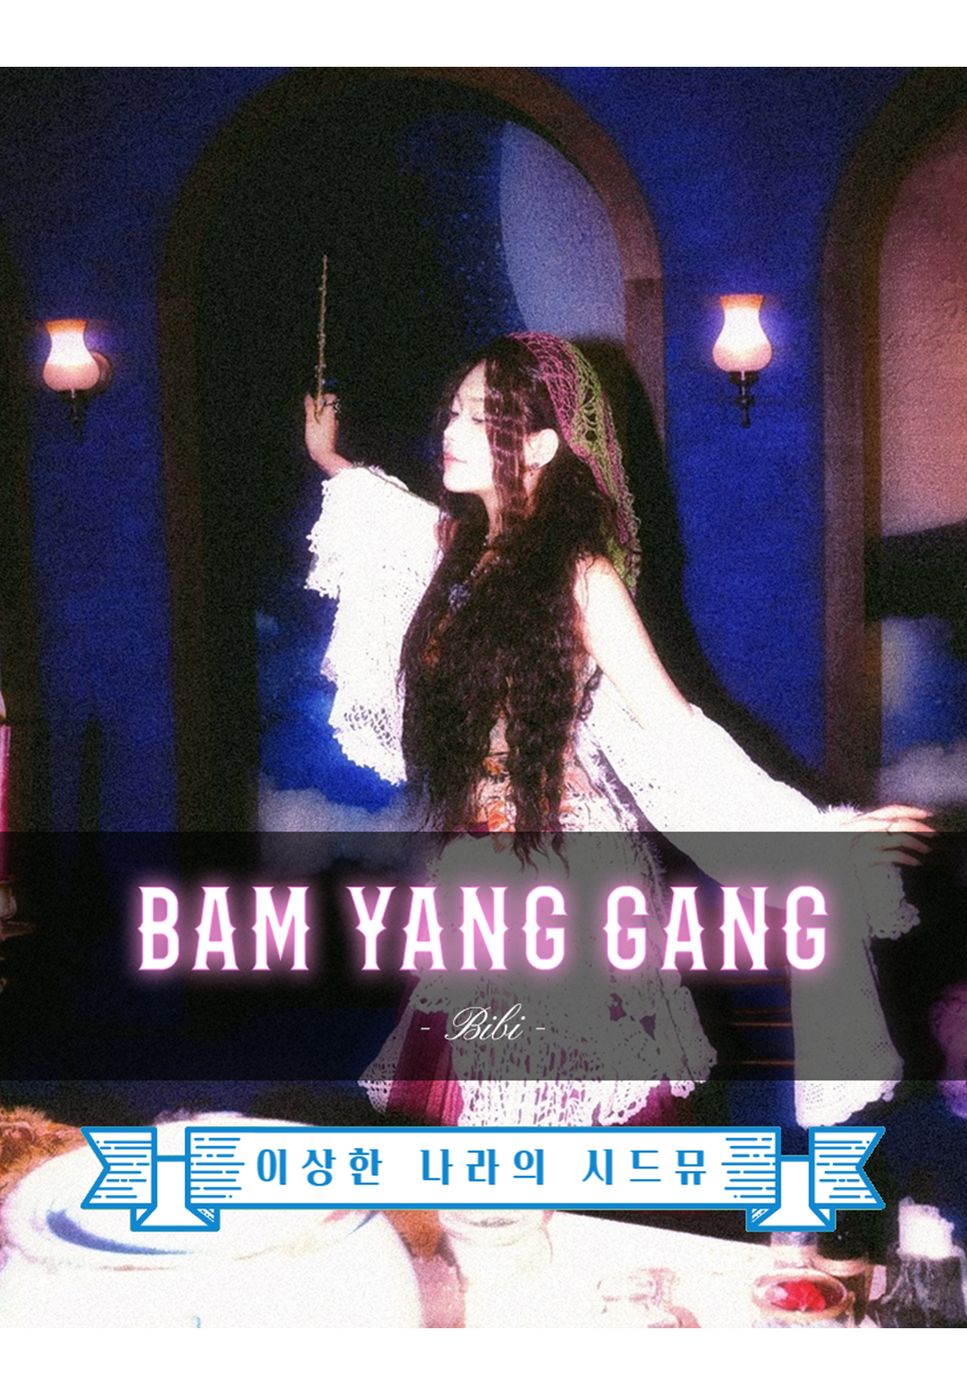 BIBI - Bam yang gang by Moonlight garden